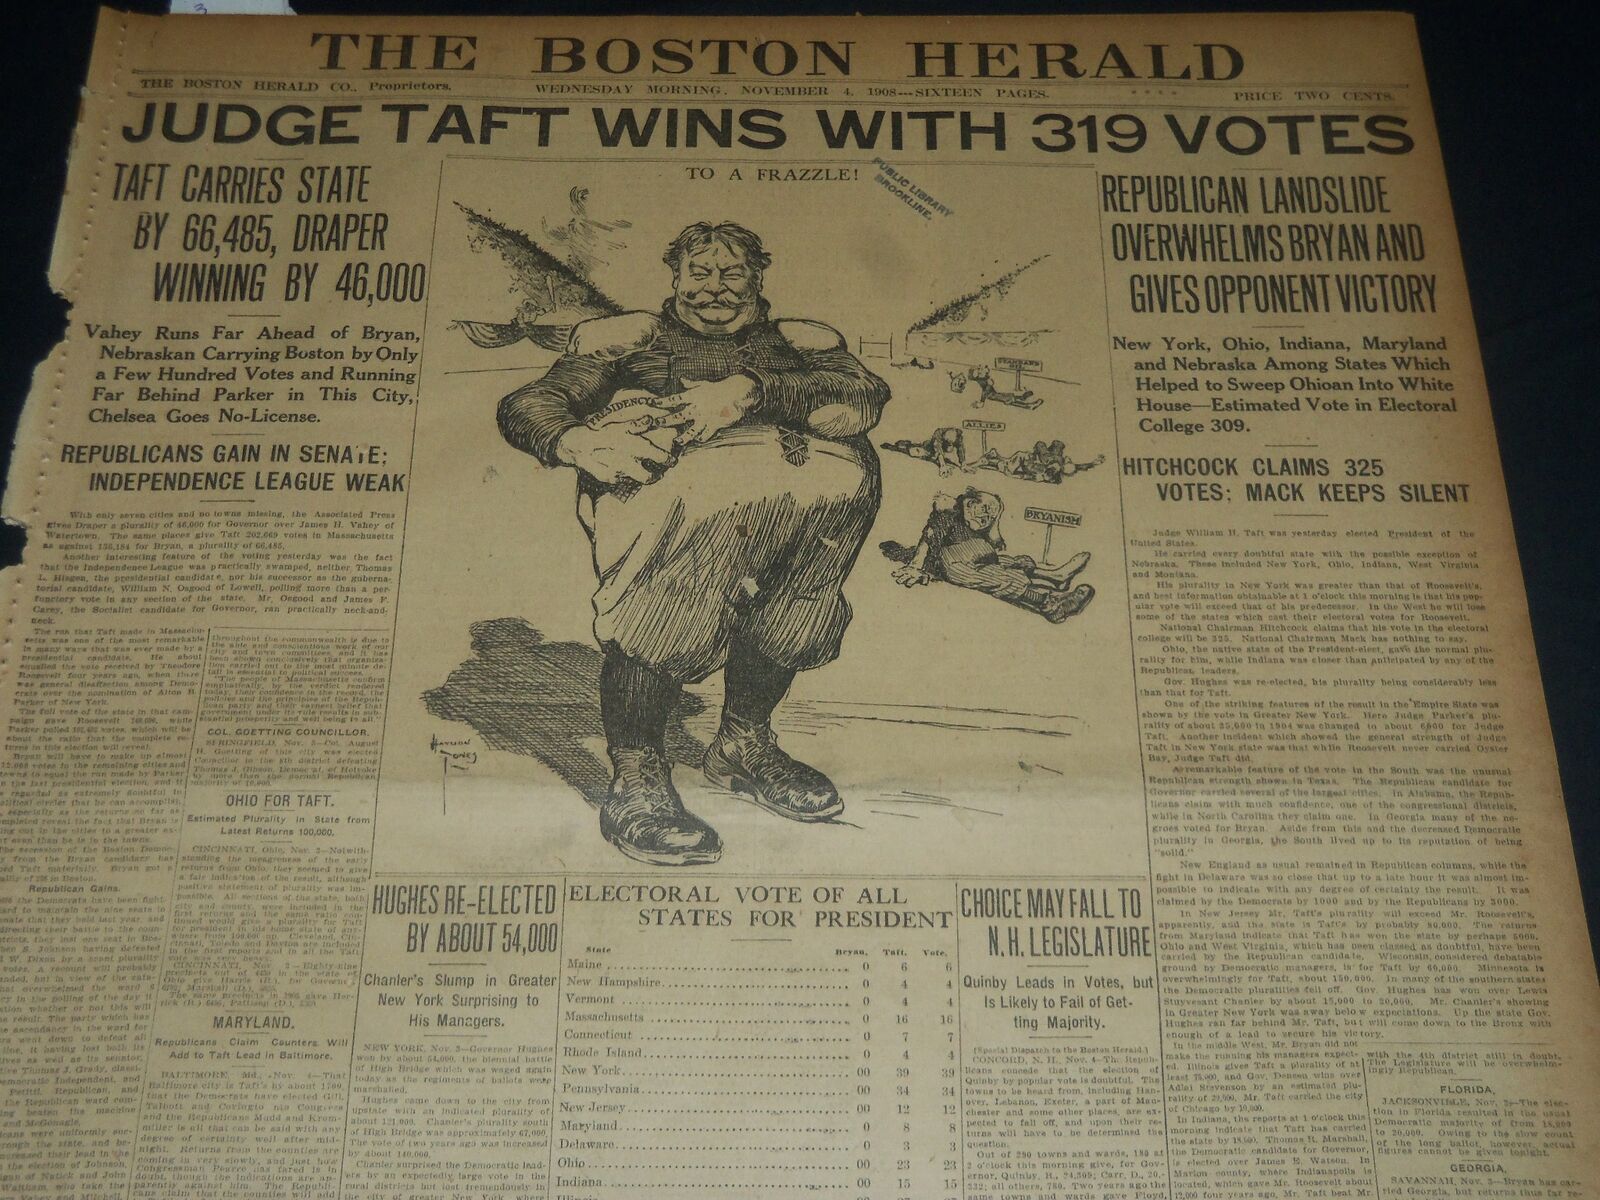 1908 NOV 4 THE BOSTON HERALD - JUDGE TAFT WINS WITH 319 VOTES - BH 241